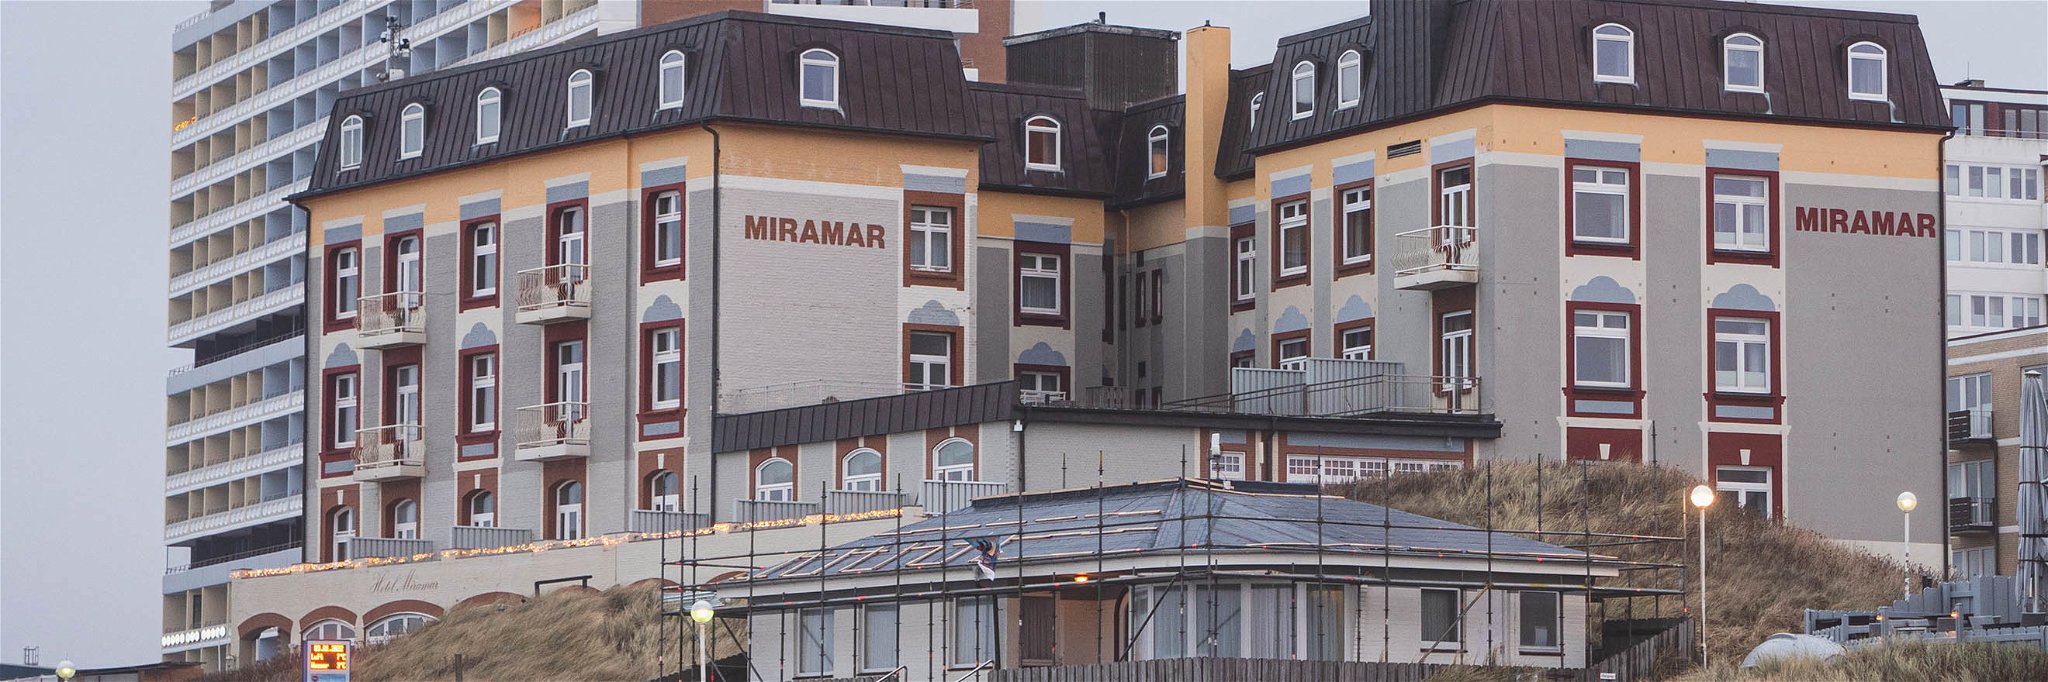 Das berühmte Hotel Miramar in Westerland liegt direkt am Strand.